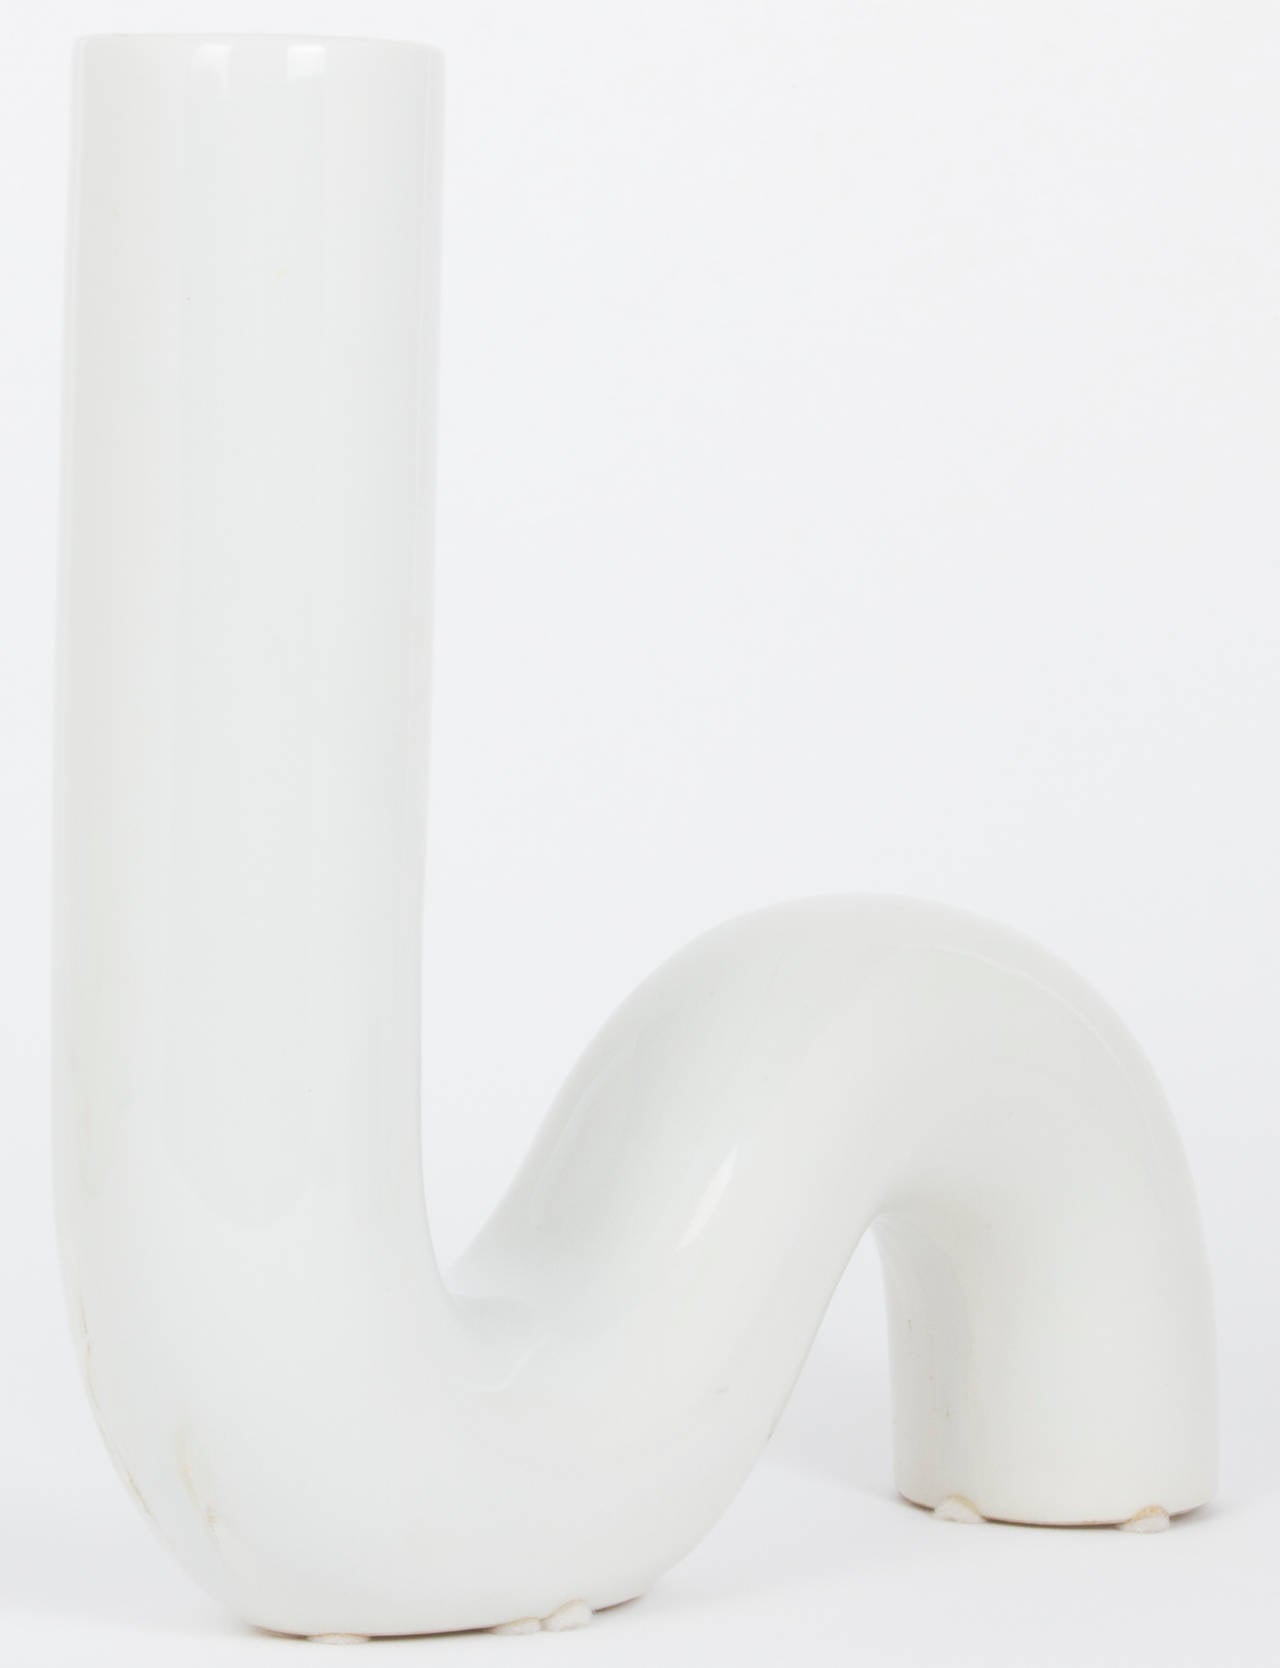 Raymor Sculptural Tubular Ceramic Vases 1